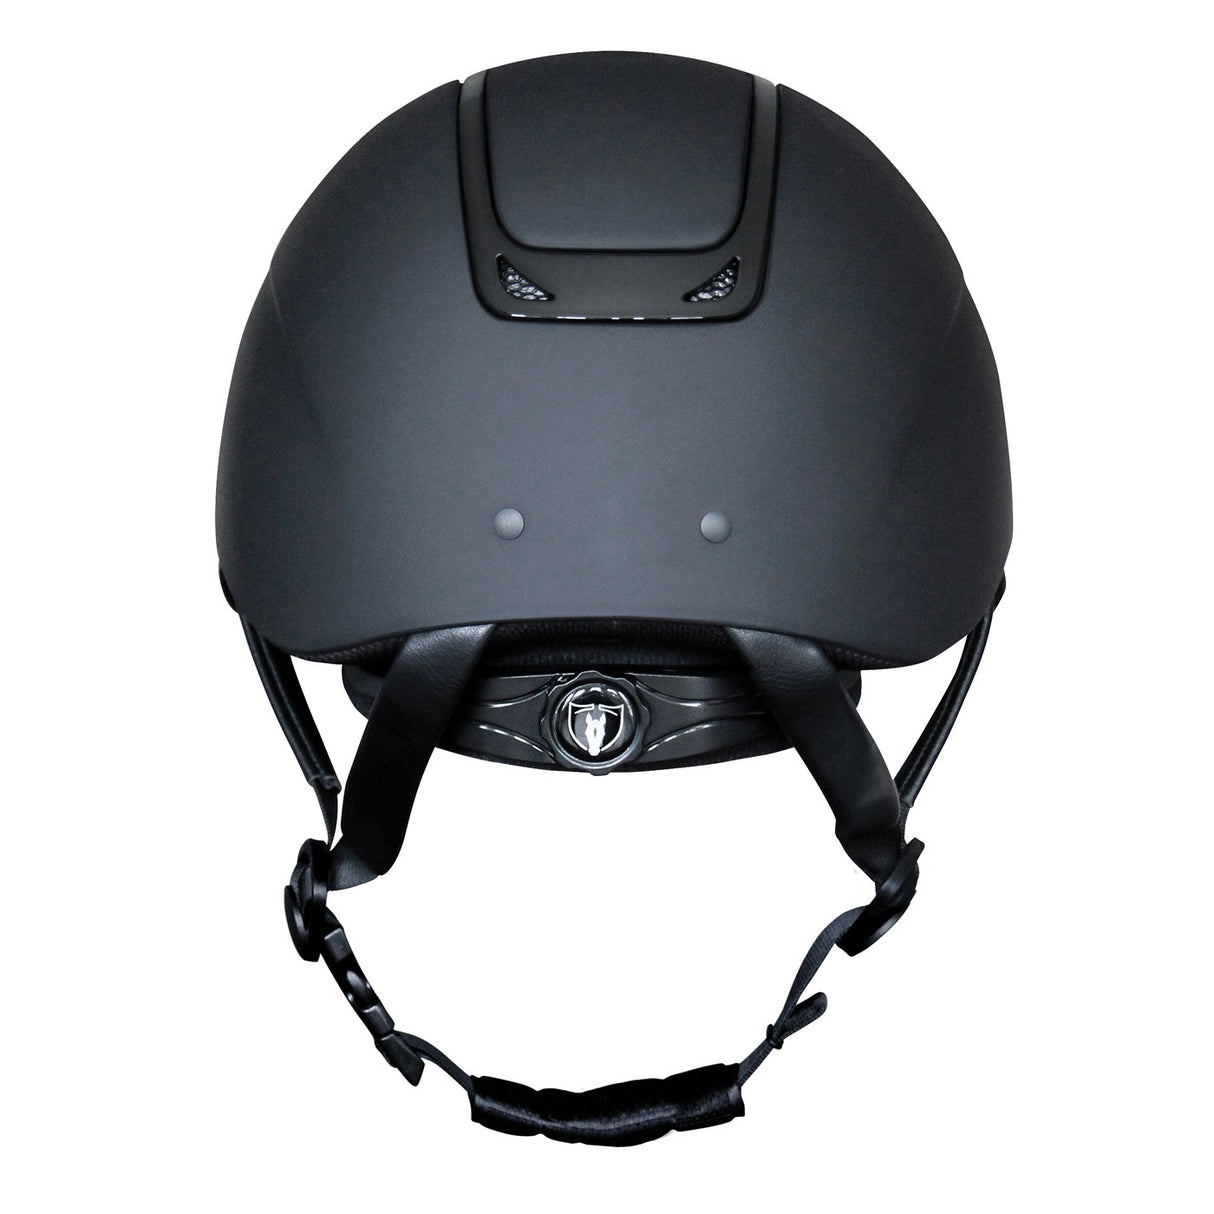 Tipperary Royal Wide Brim Helmet - Matte Black Gloss Trim